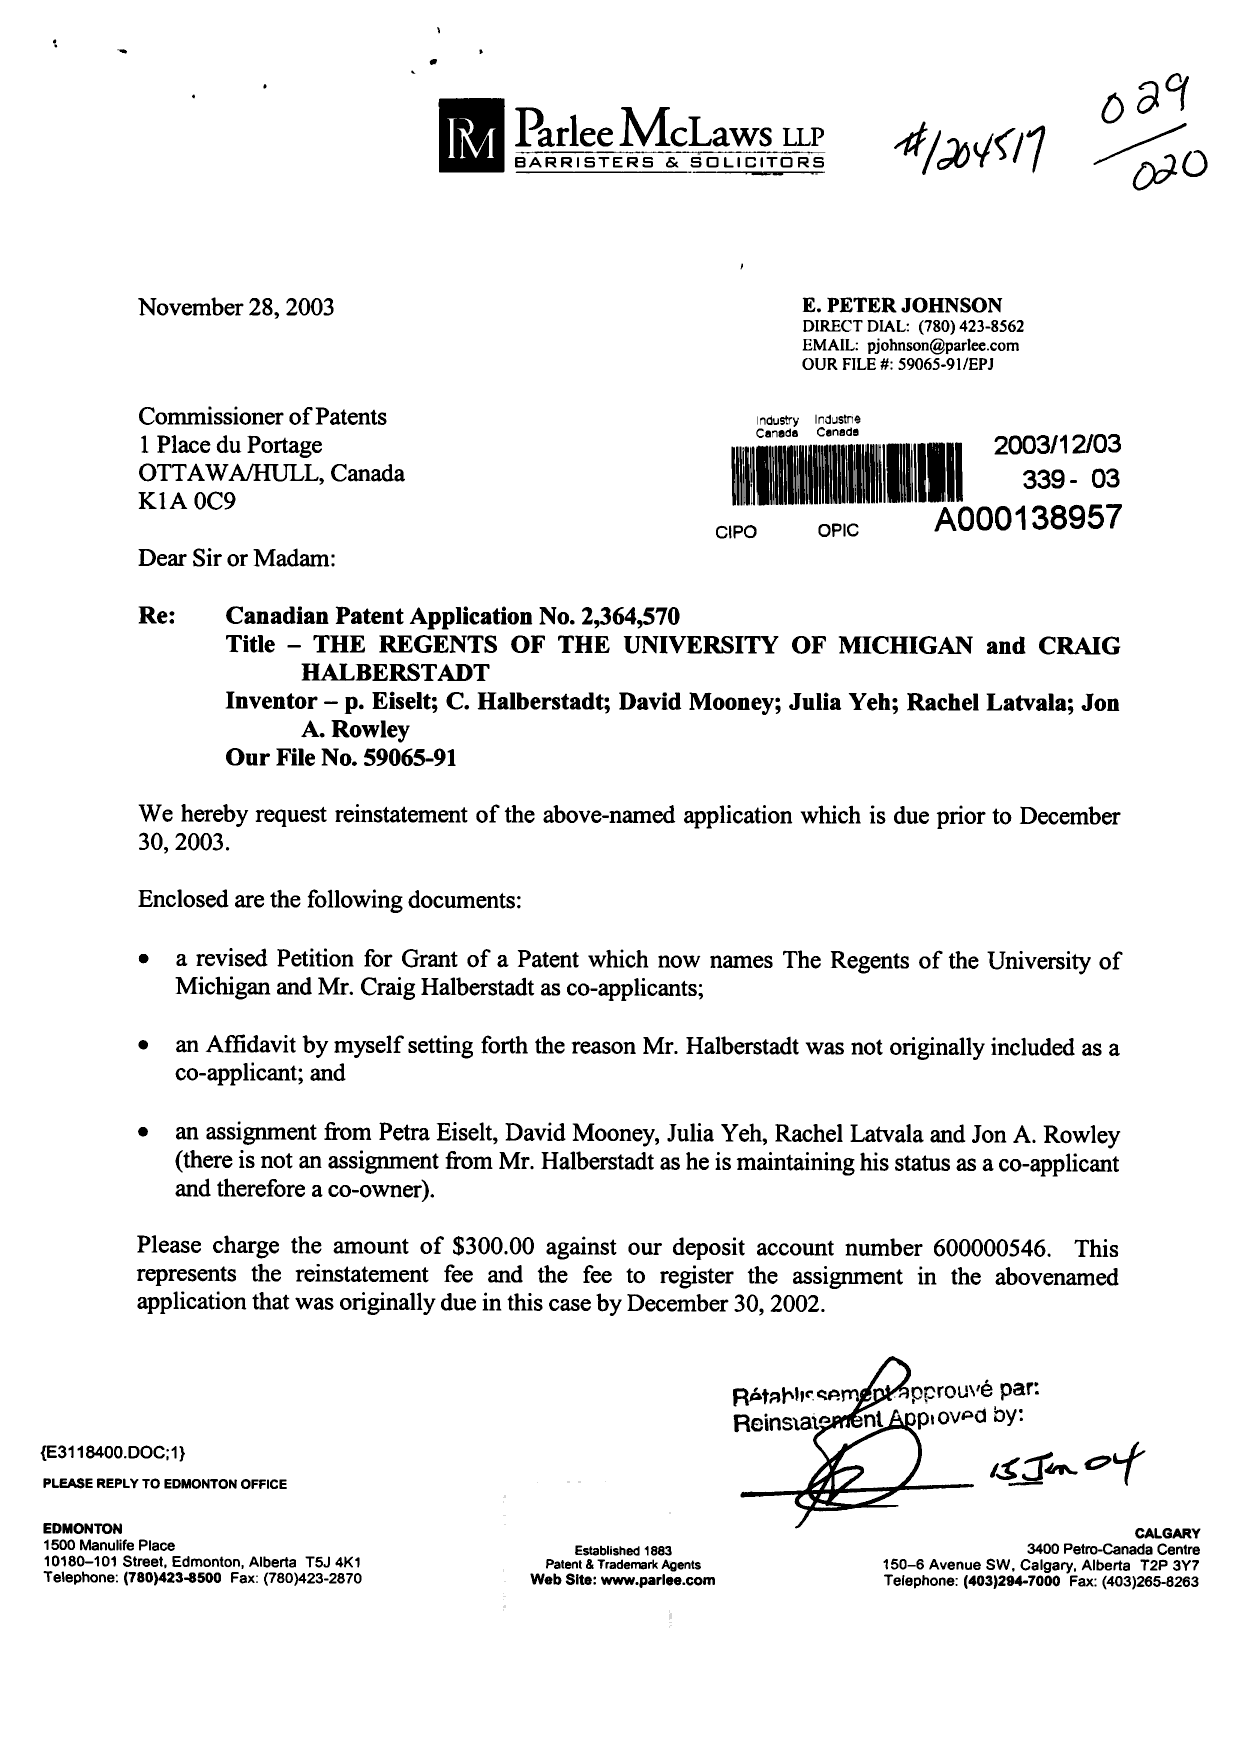 Canadian Patent Document 2364570. Correspondence 20031203. Image 1 of 16